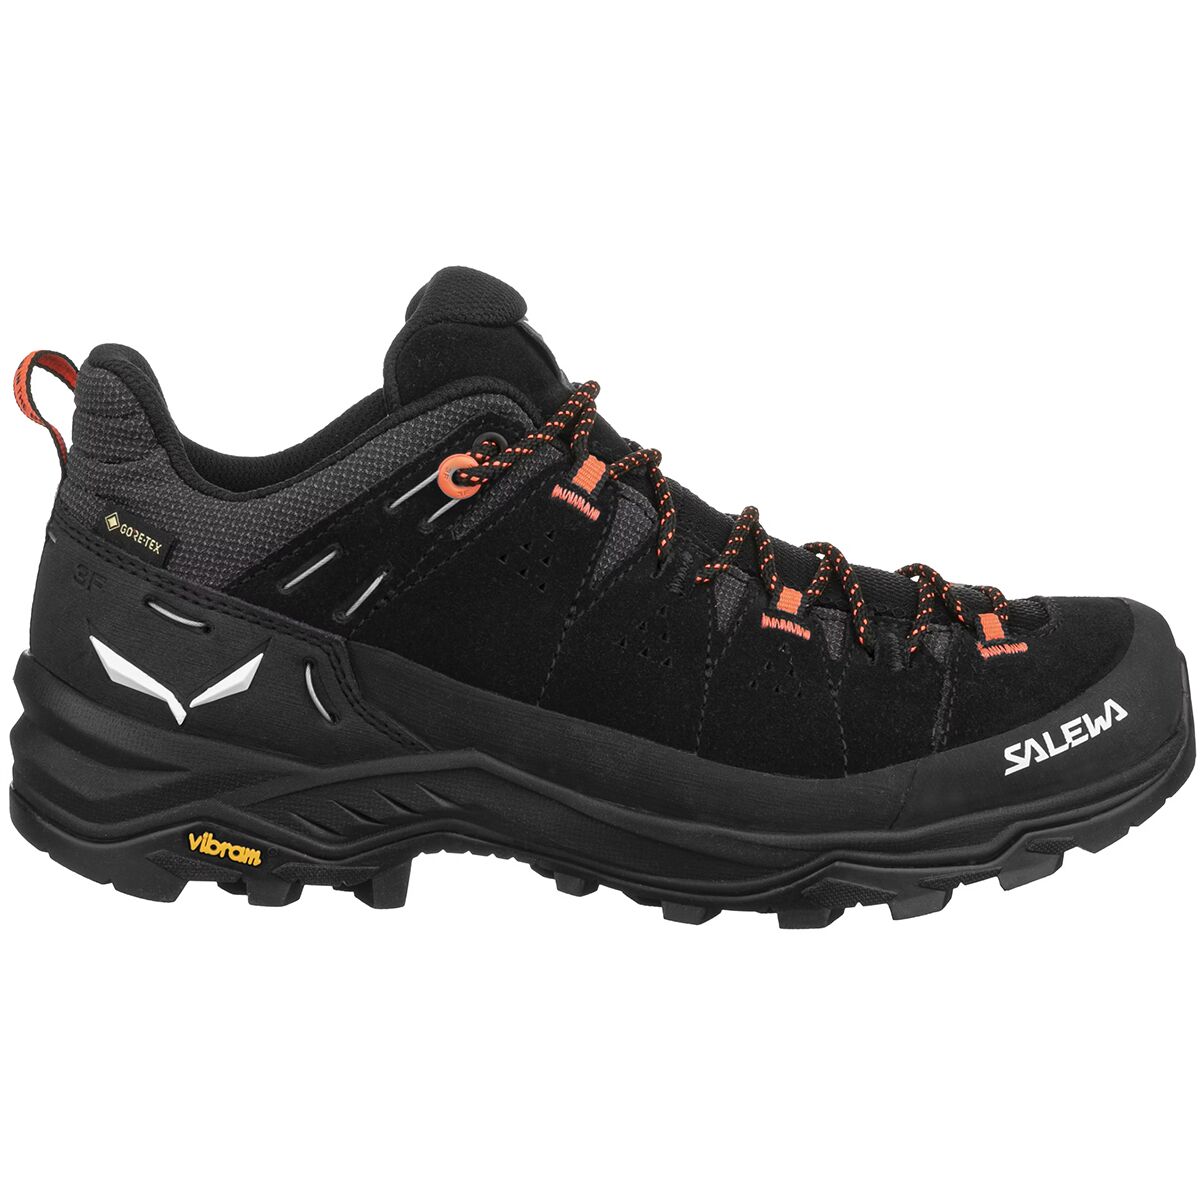 Alp Trainer 2 GTX Hiking Shoe - Women